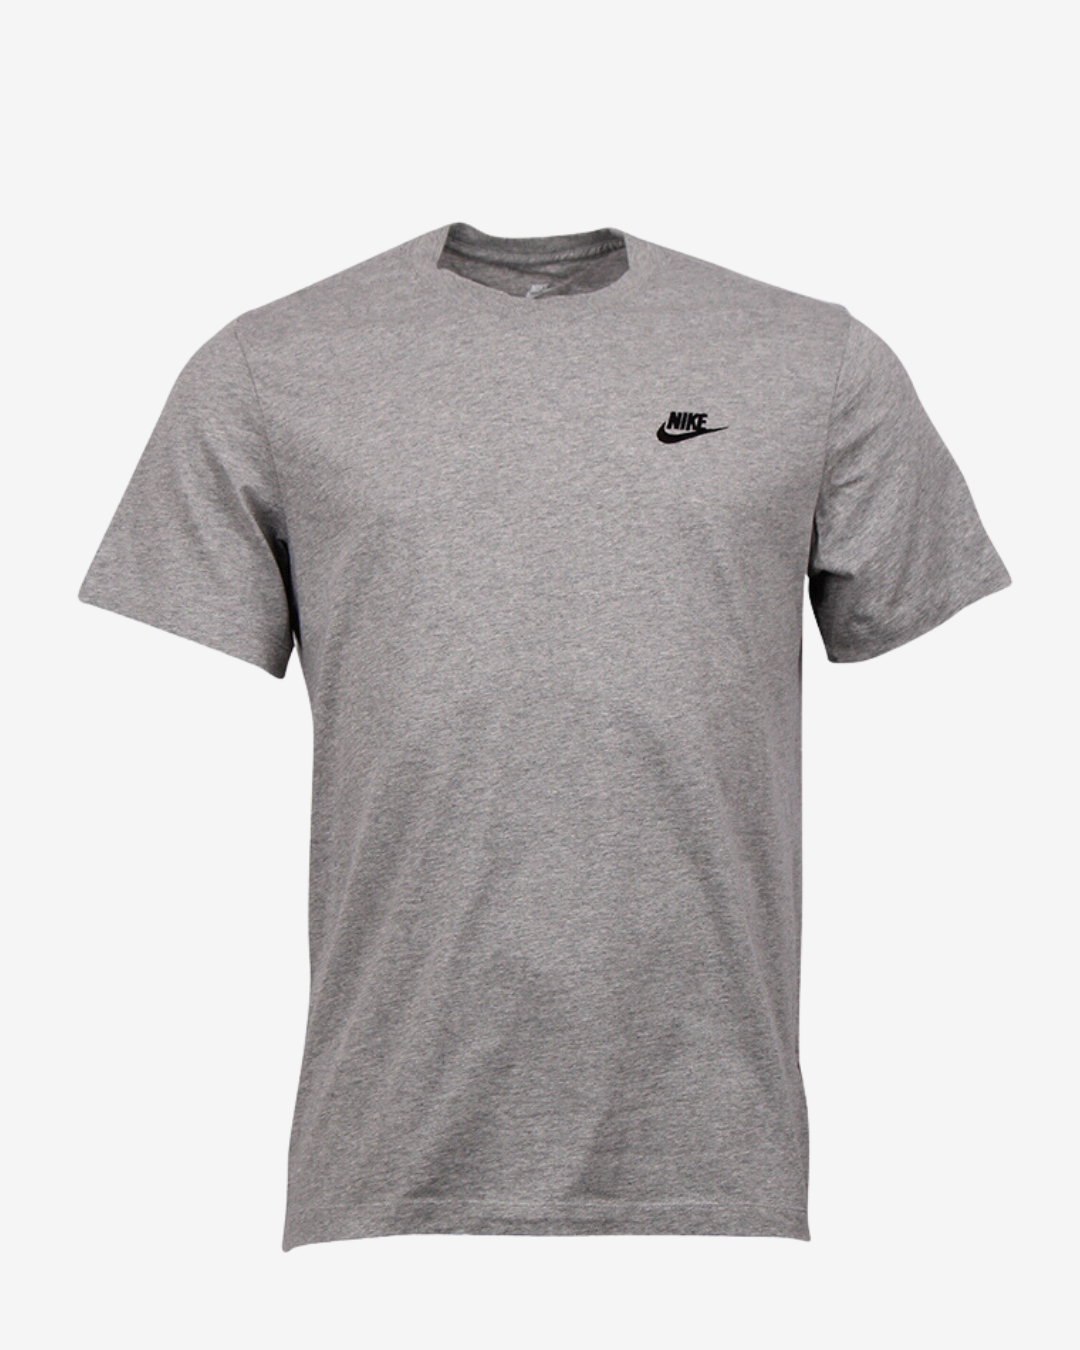 Nike Club t-shirt - Grå - Str. XL - Modish.dk